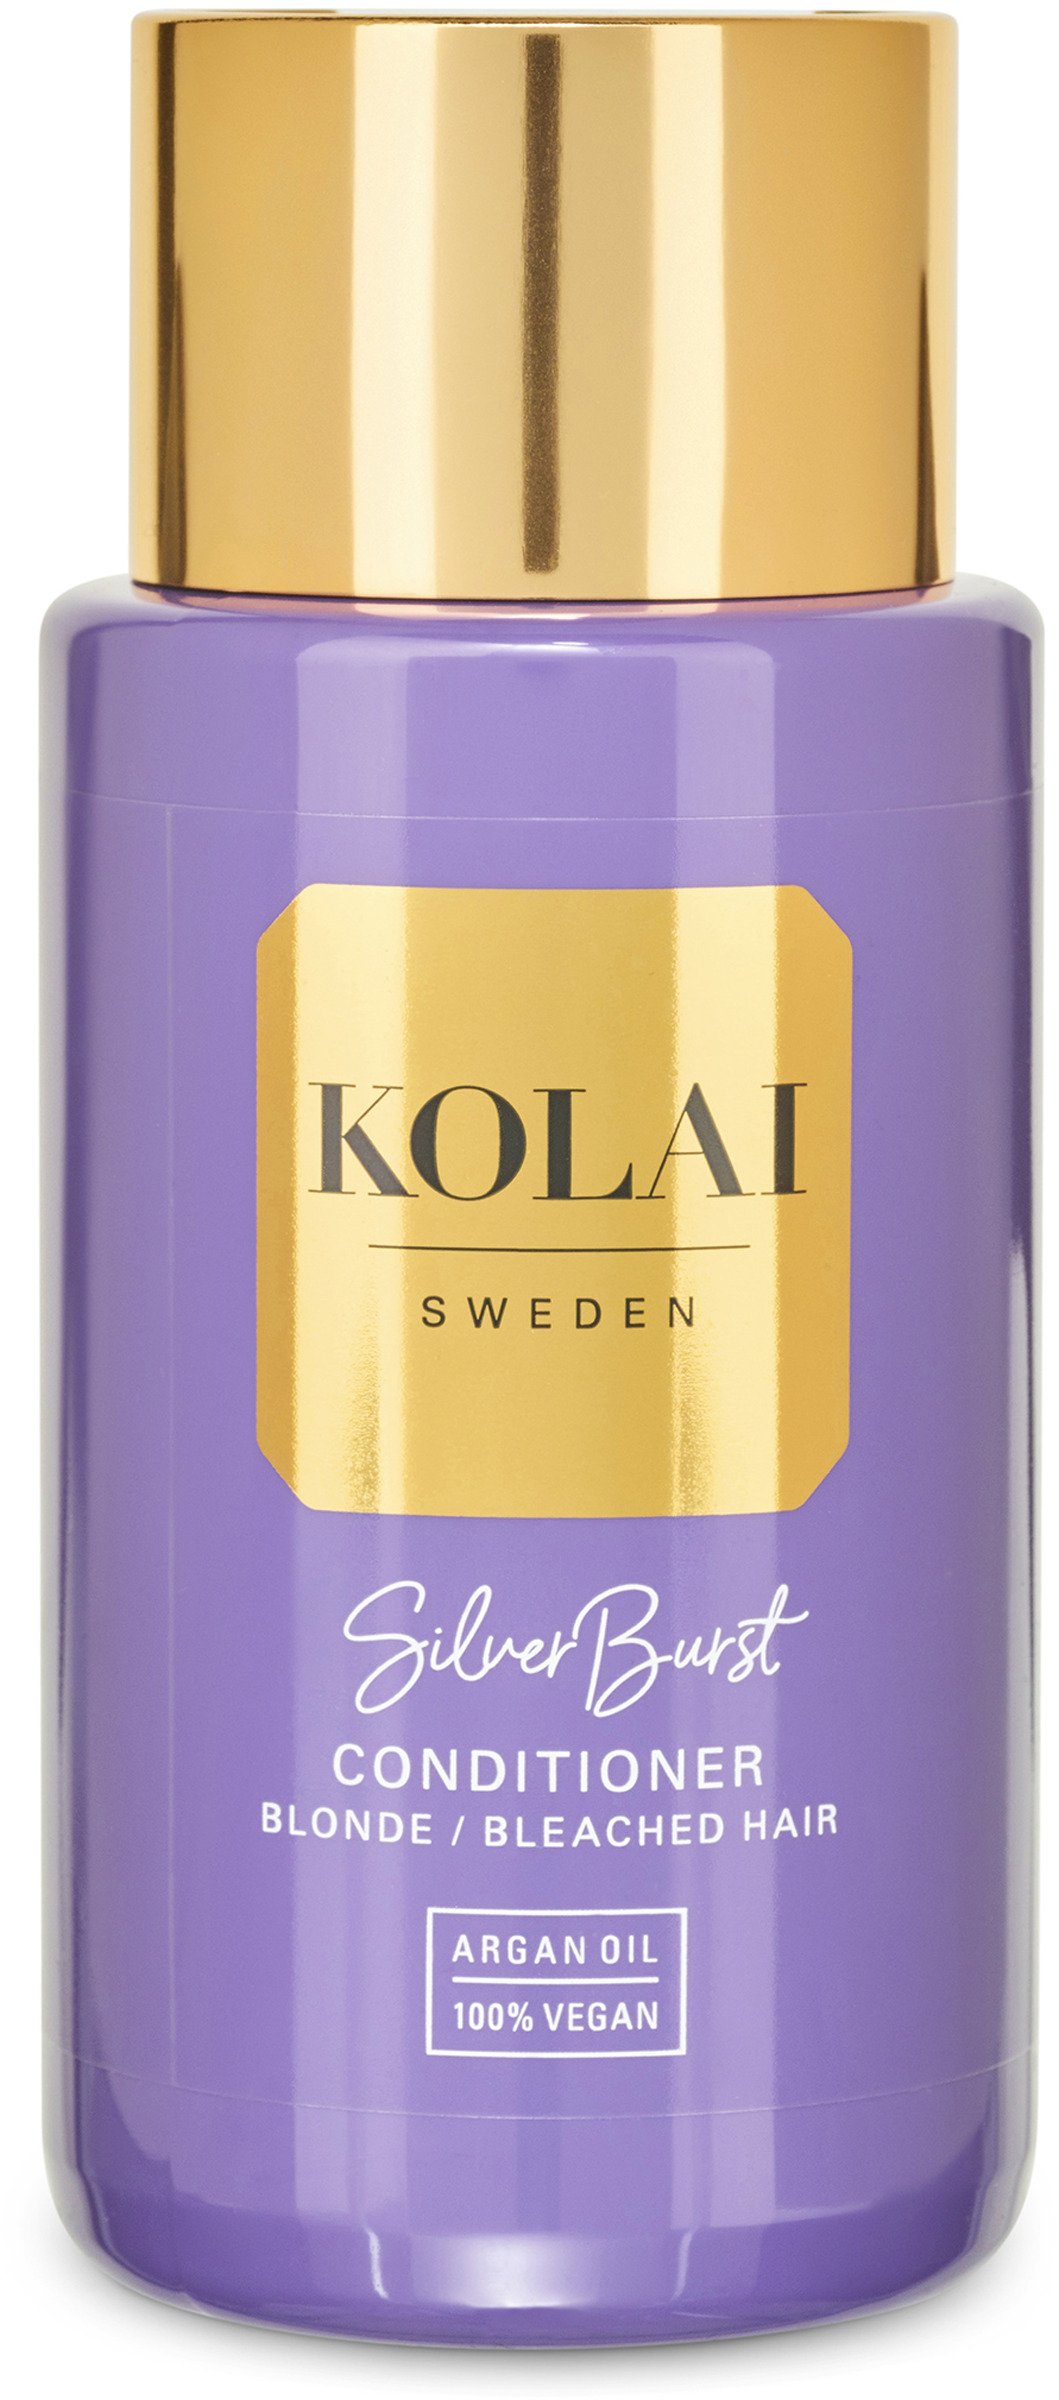 KOLAI Silver balsam 250 ml